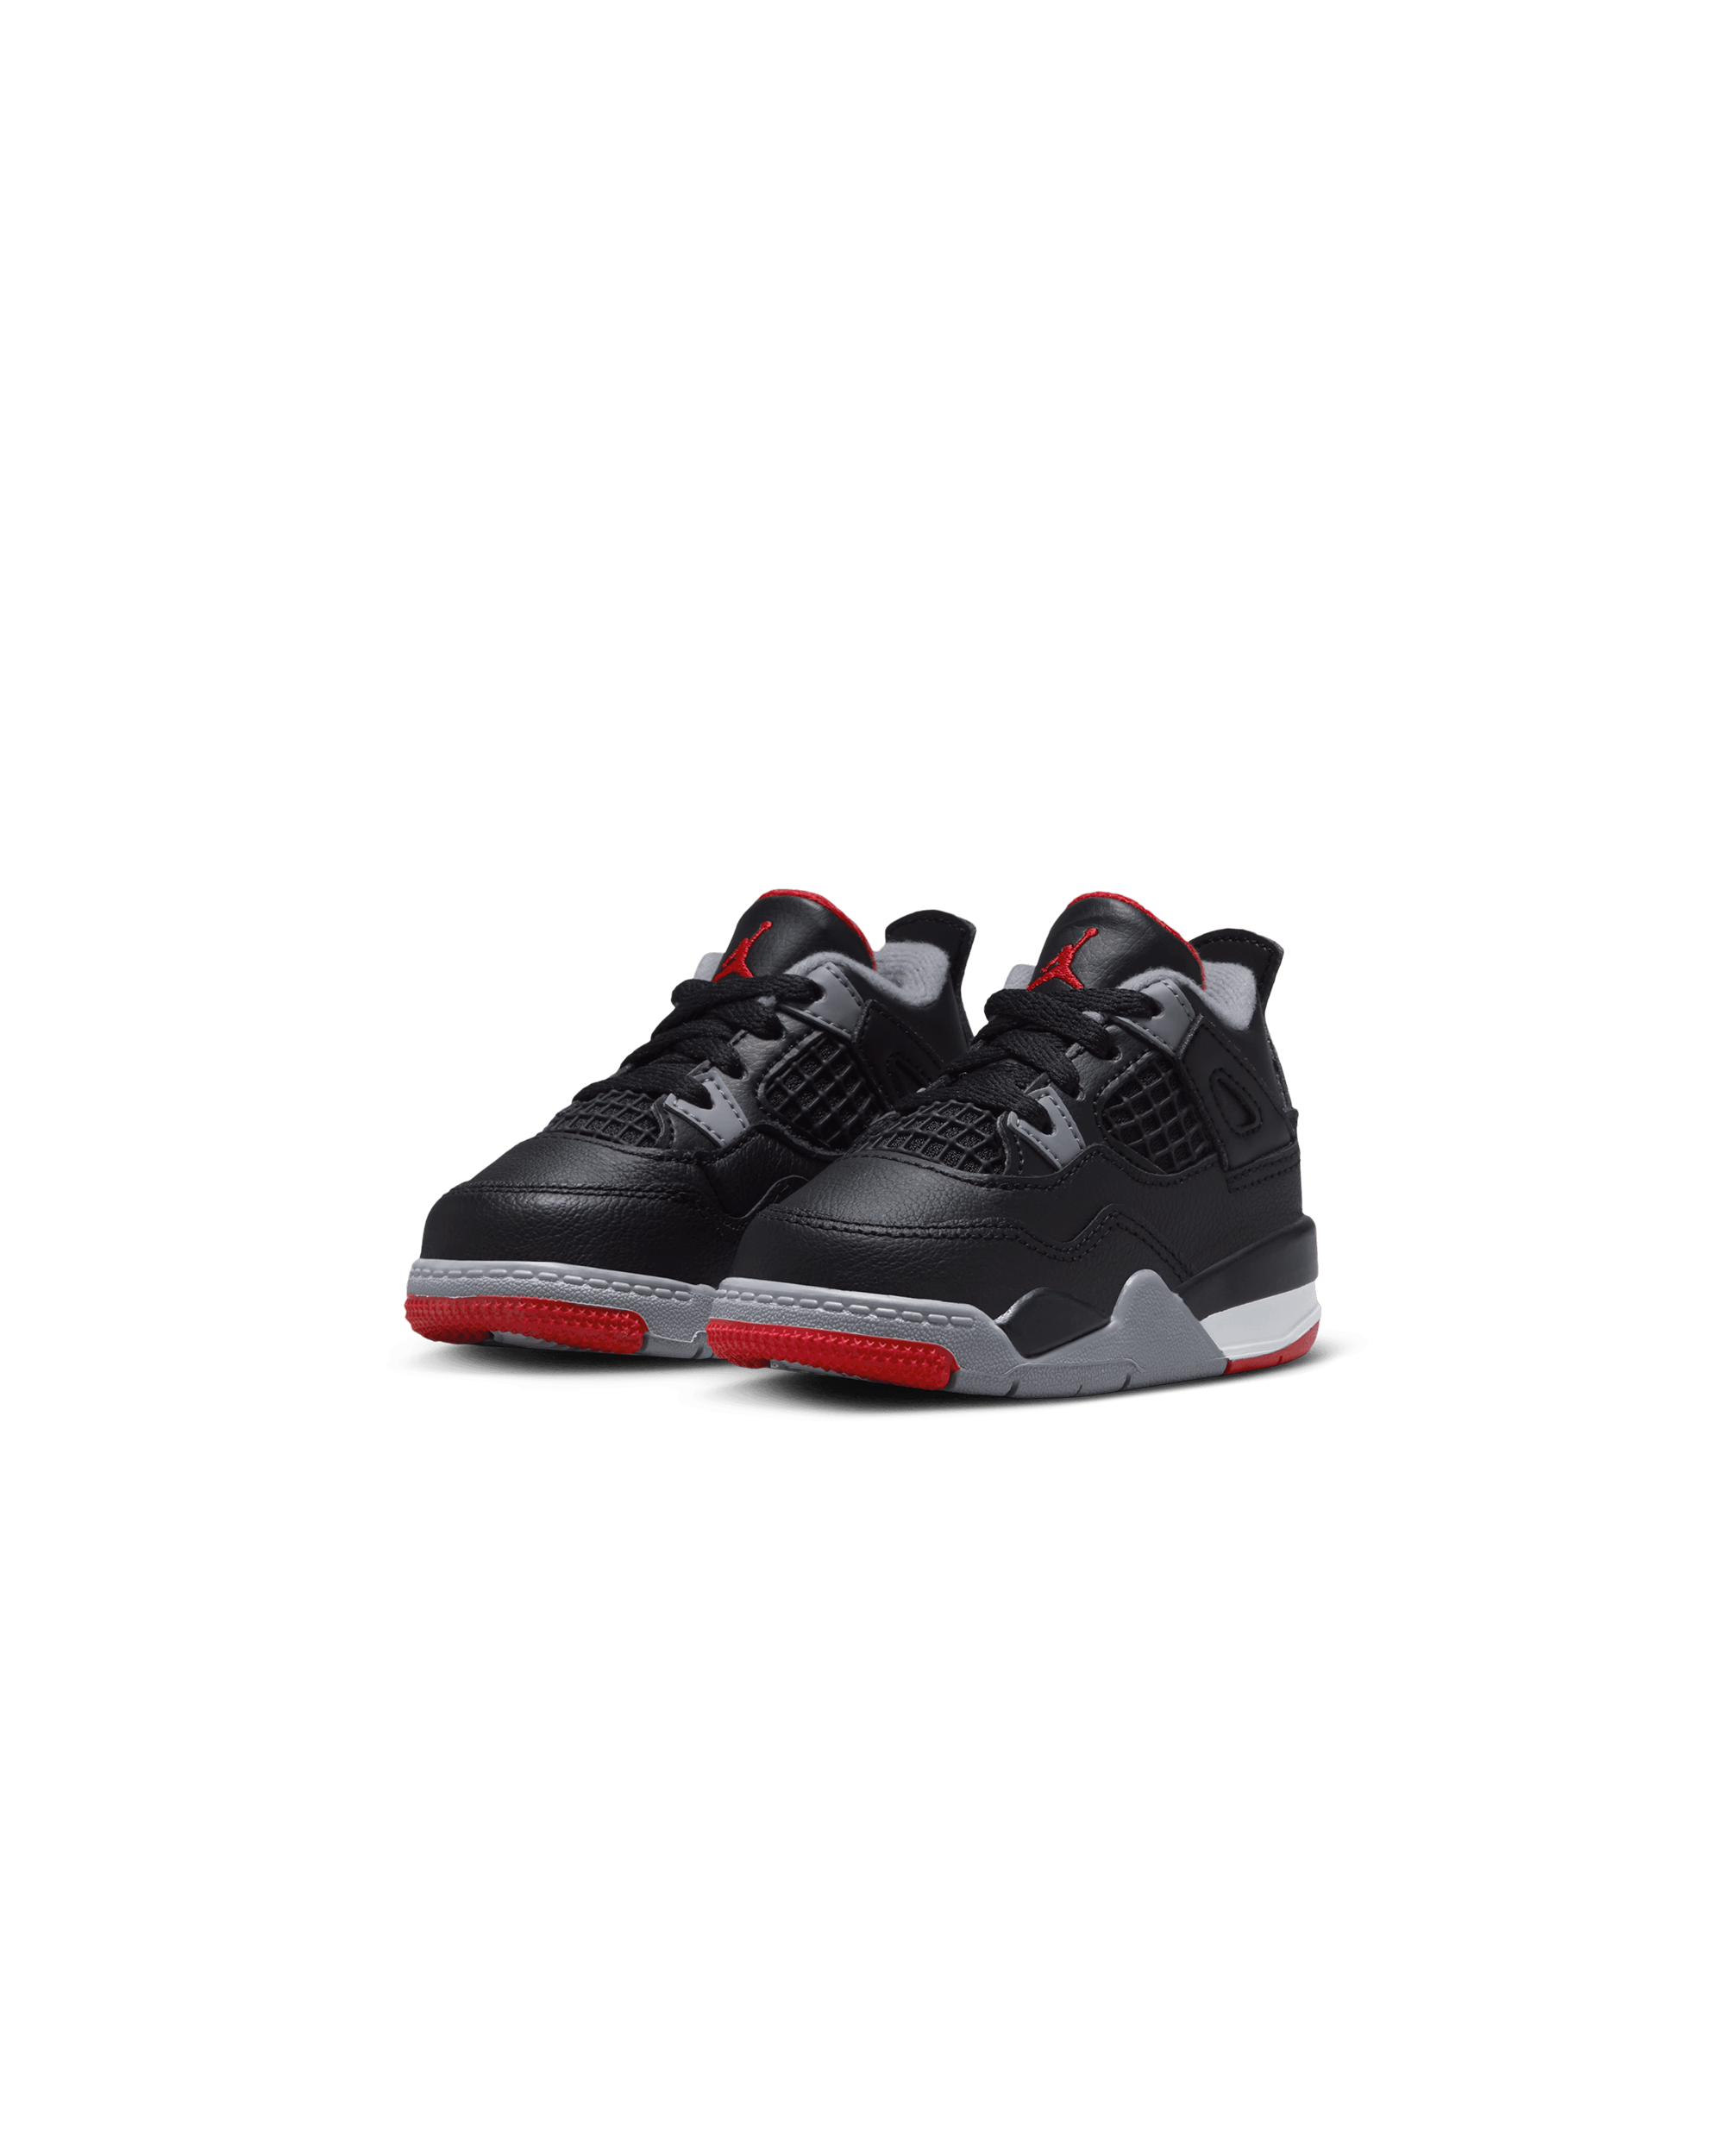 Air Jordan 4 Retro "Bred Reimagined" (TD) - Black / Fire Red / Grey / White